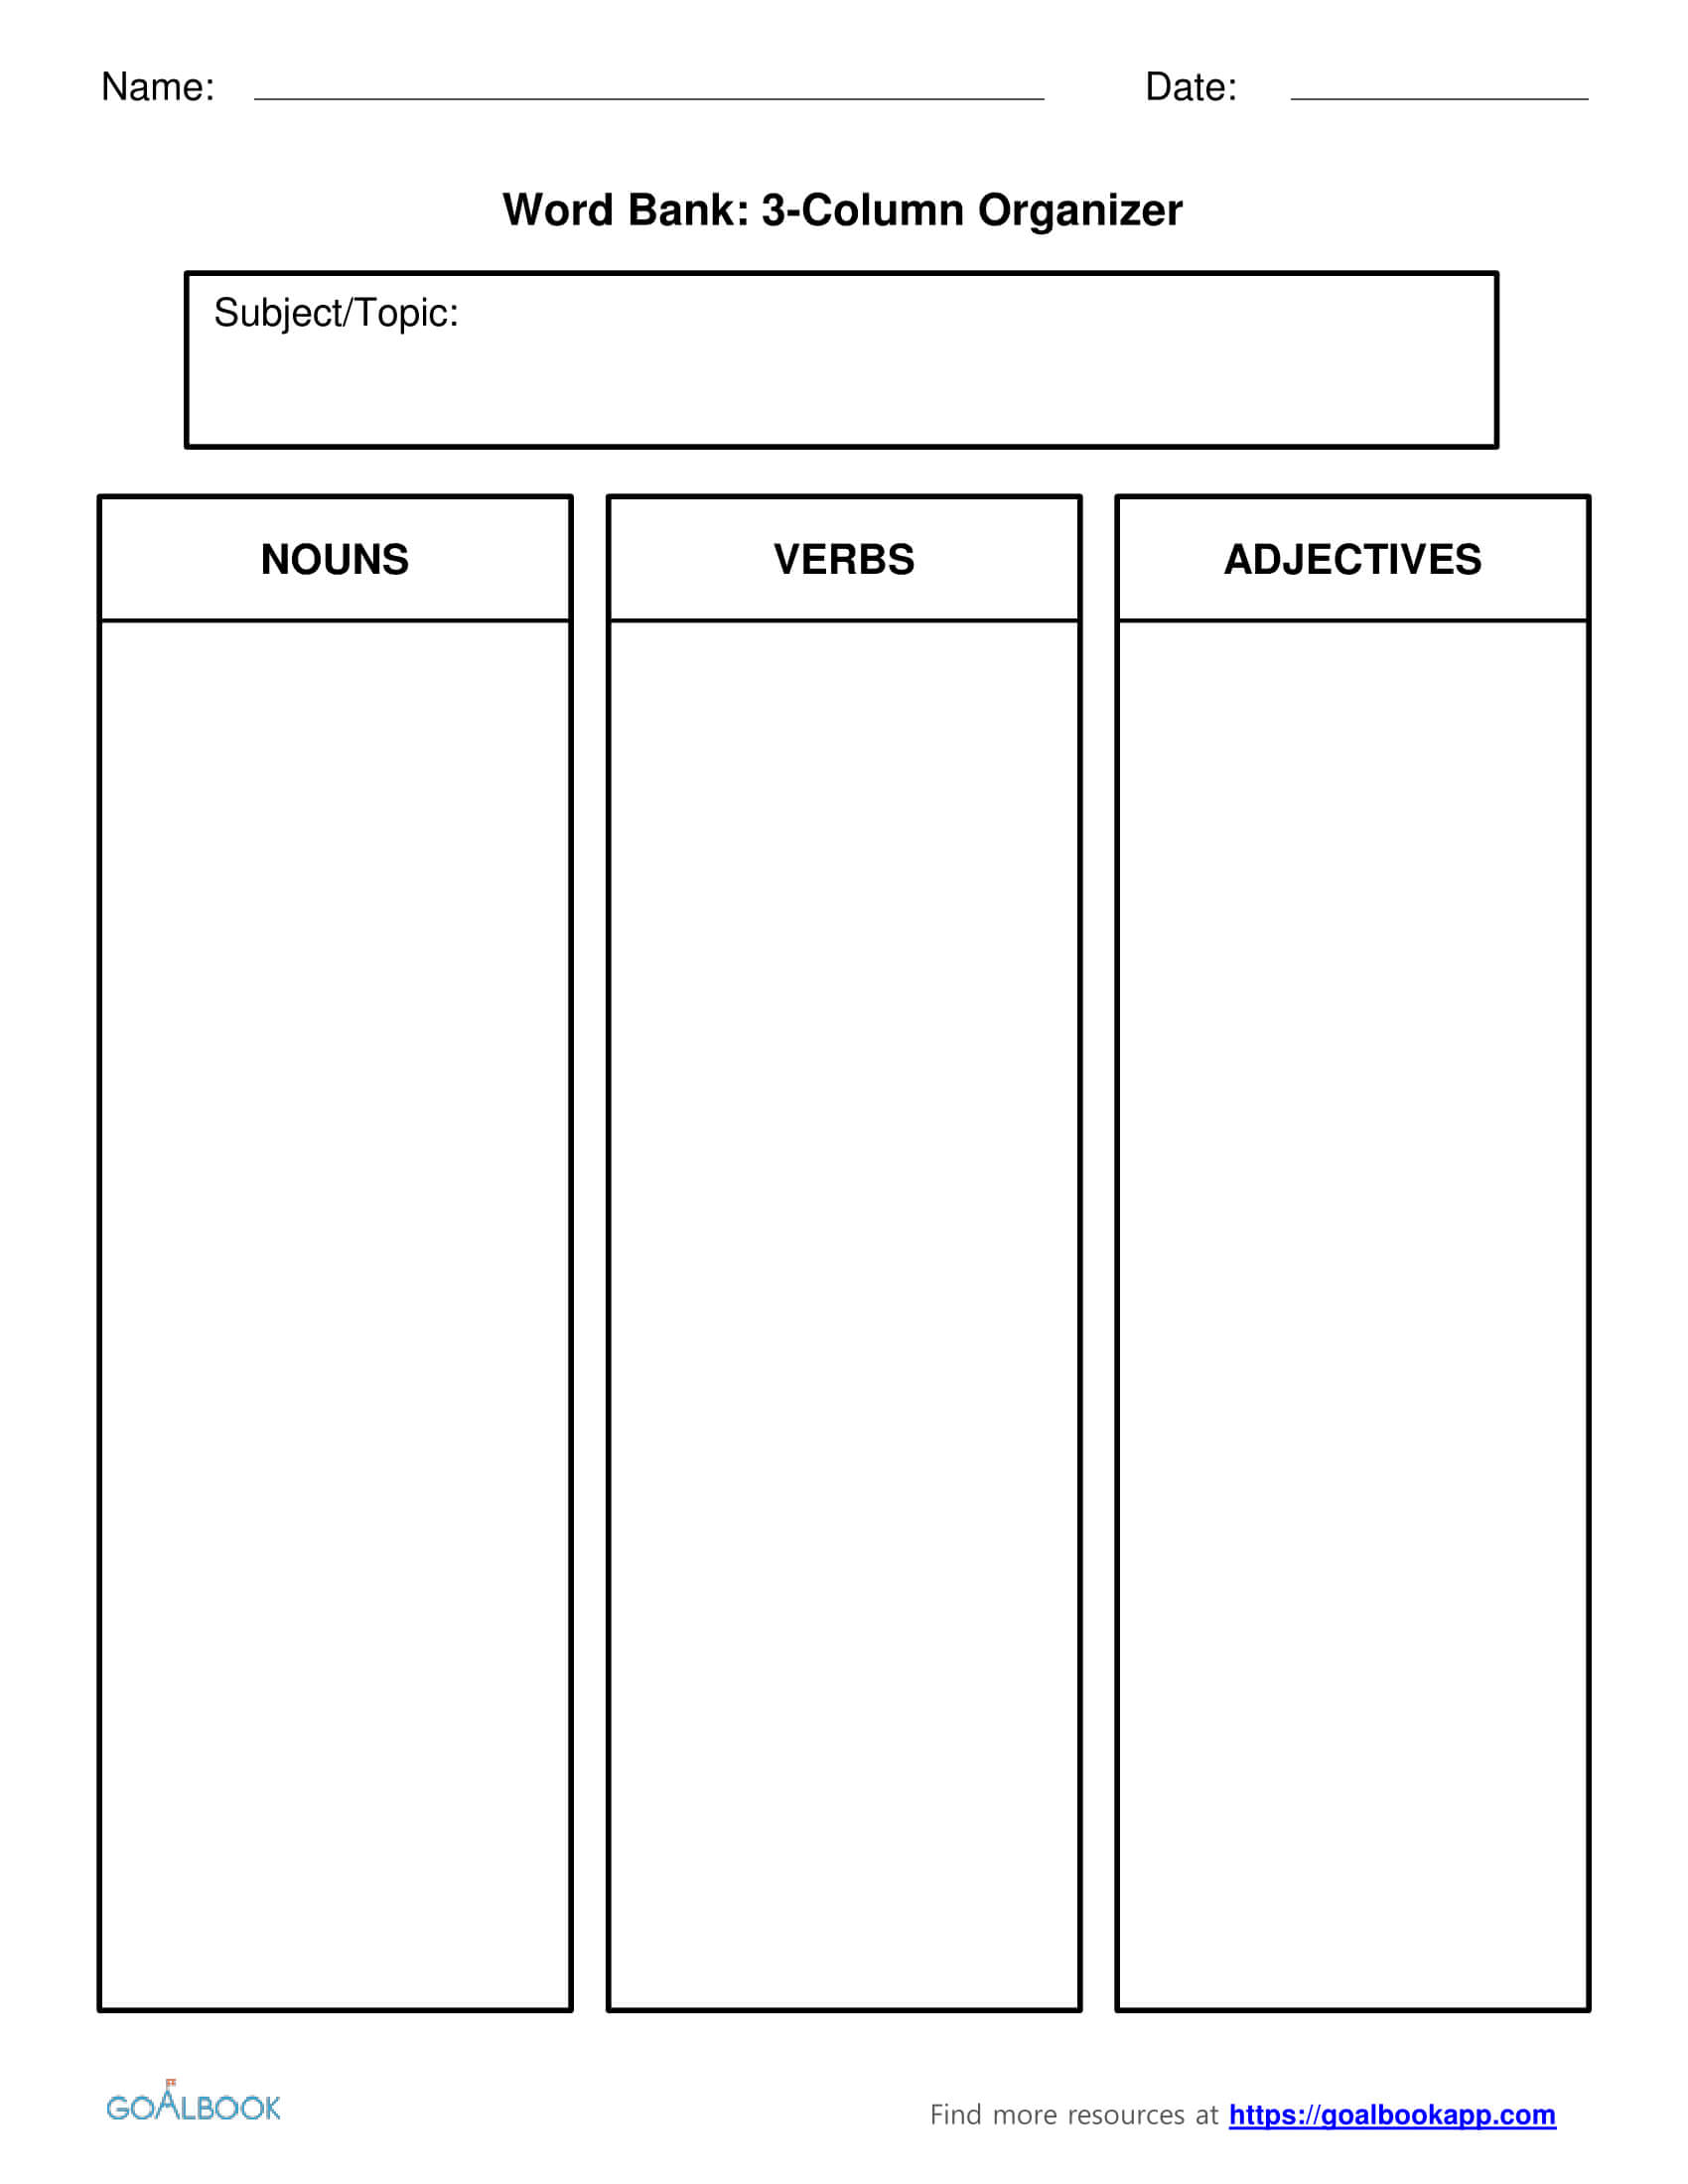 Word Bank | Udl Strategies – Goalbook Toolkit With Regard To 3 Column Word Template